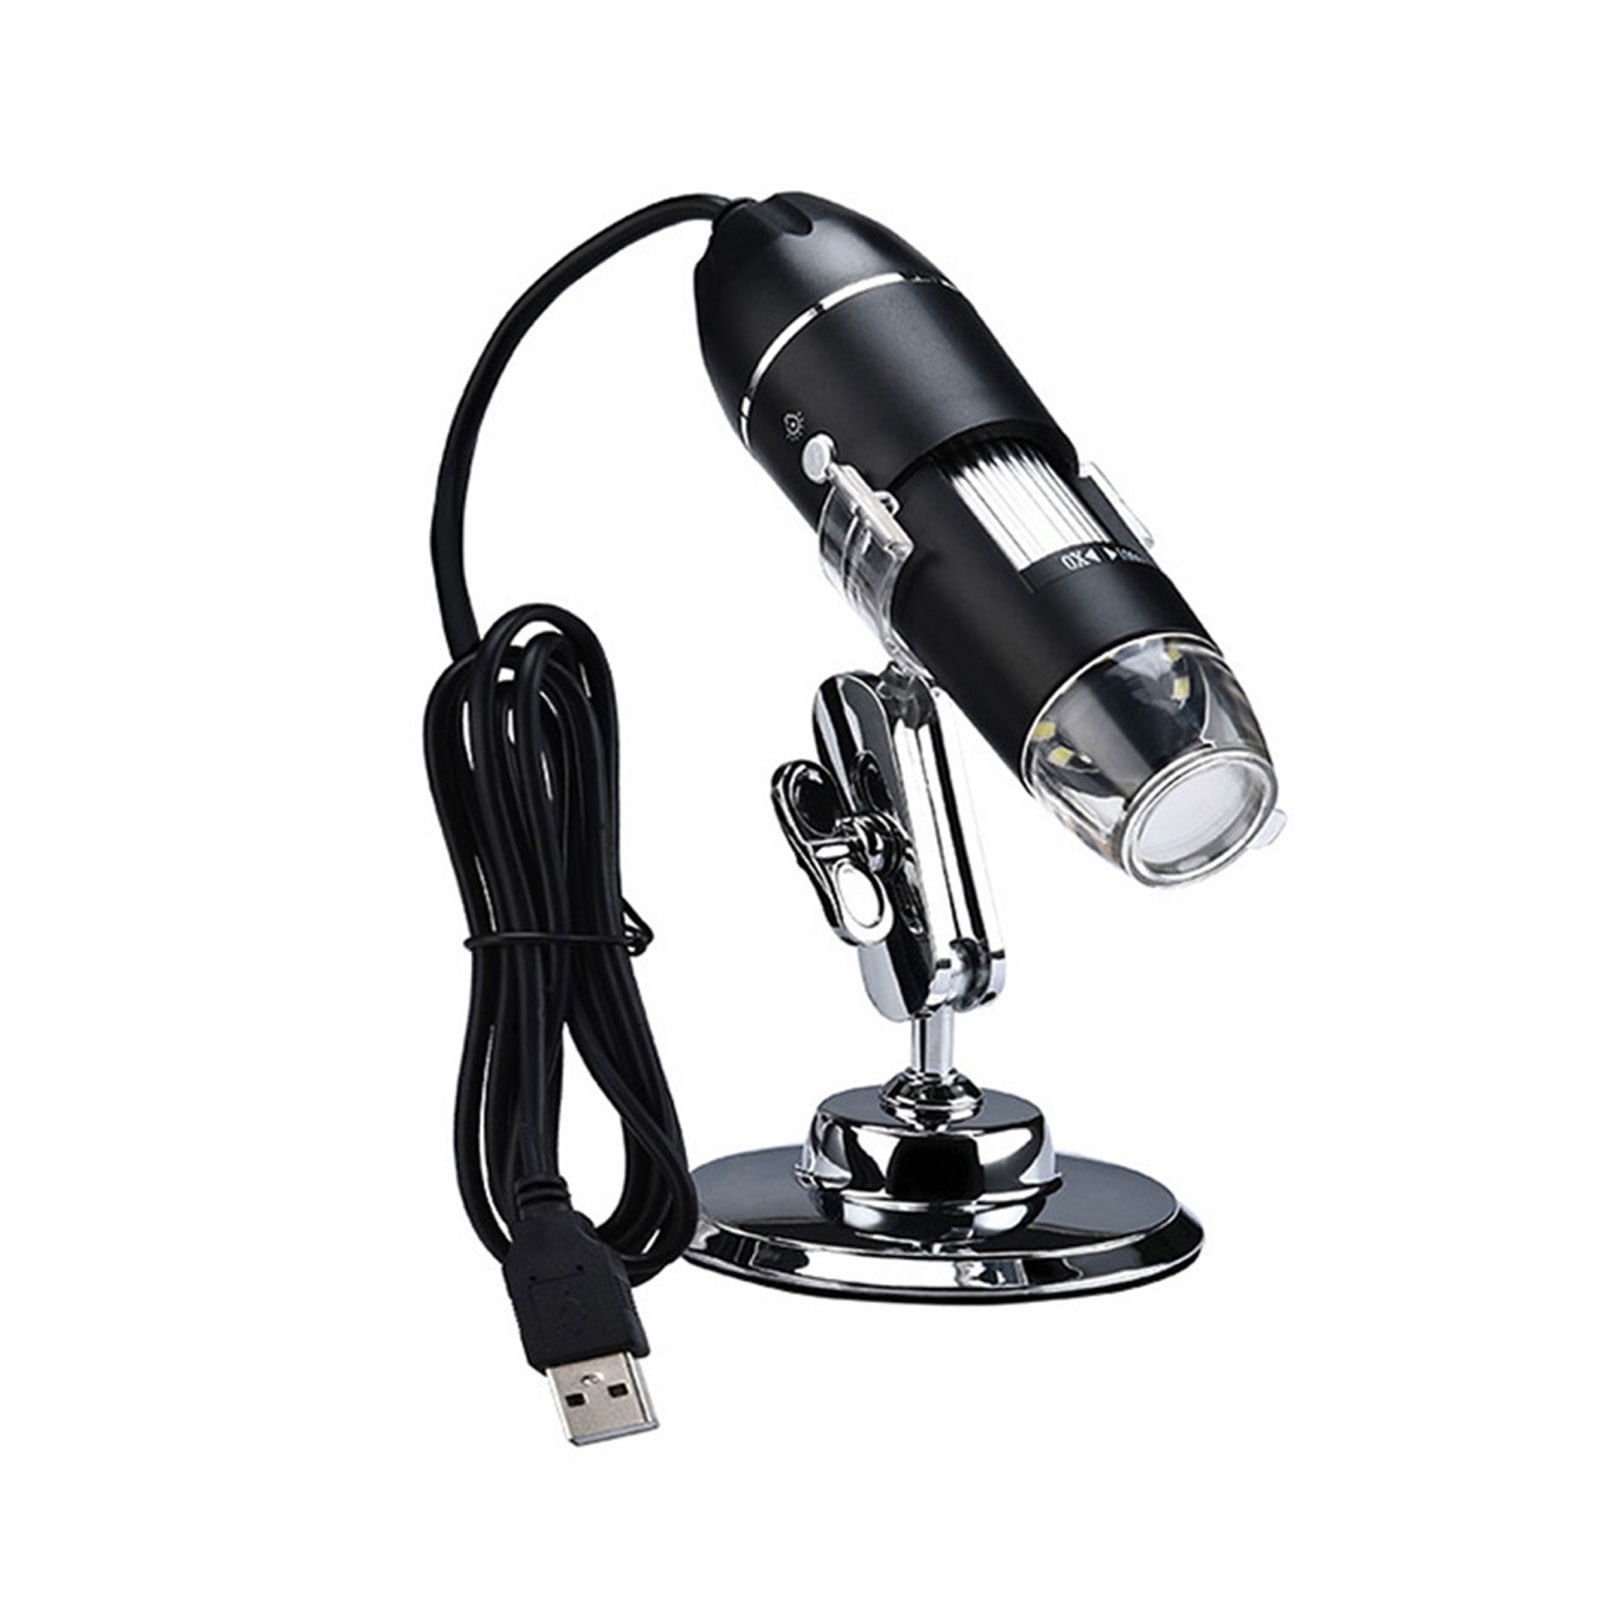 Andonstar 2MP Digital USB Digital Microscope with Flexible Stand 